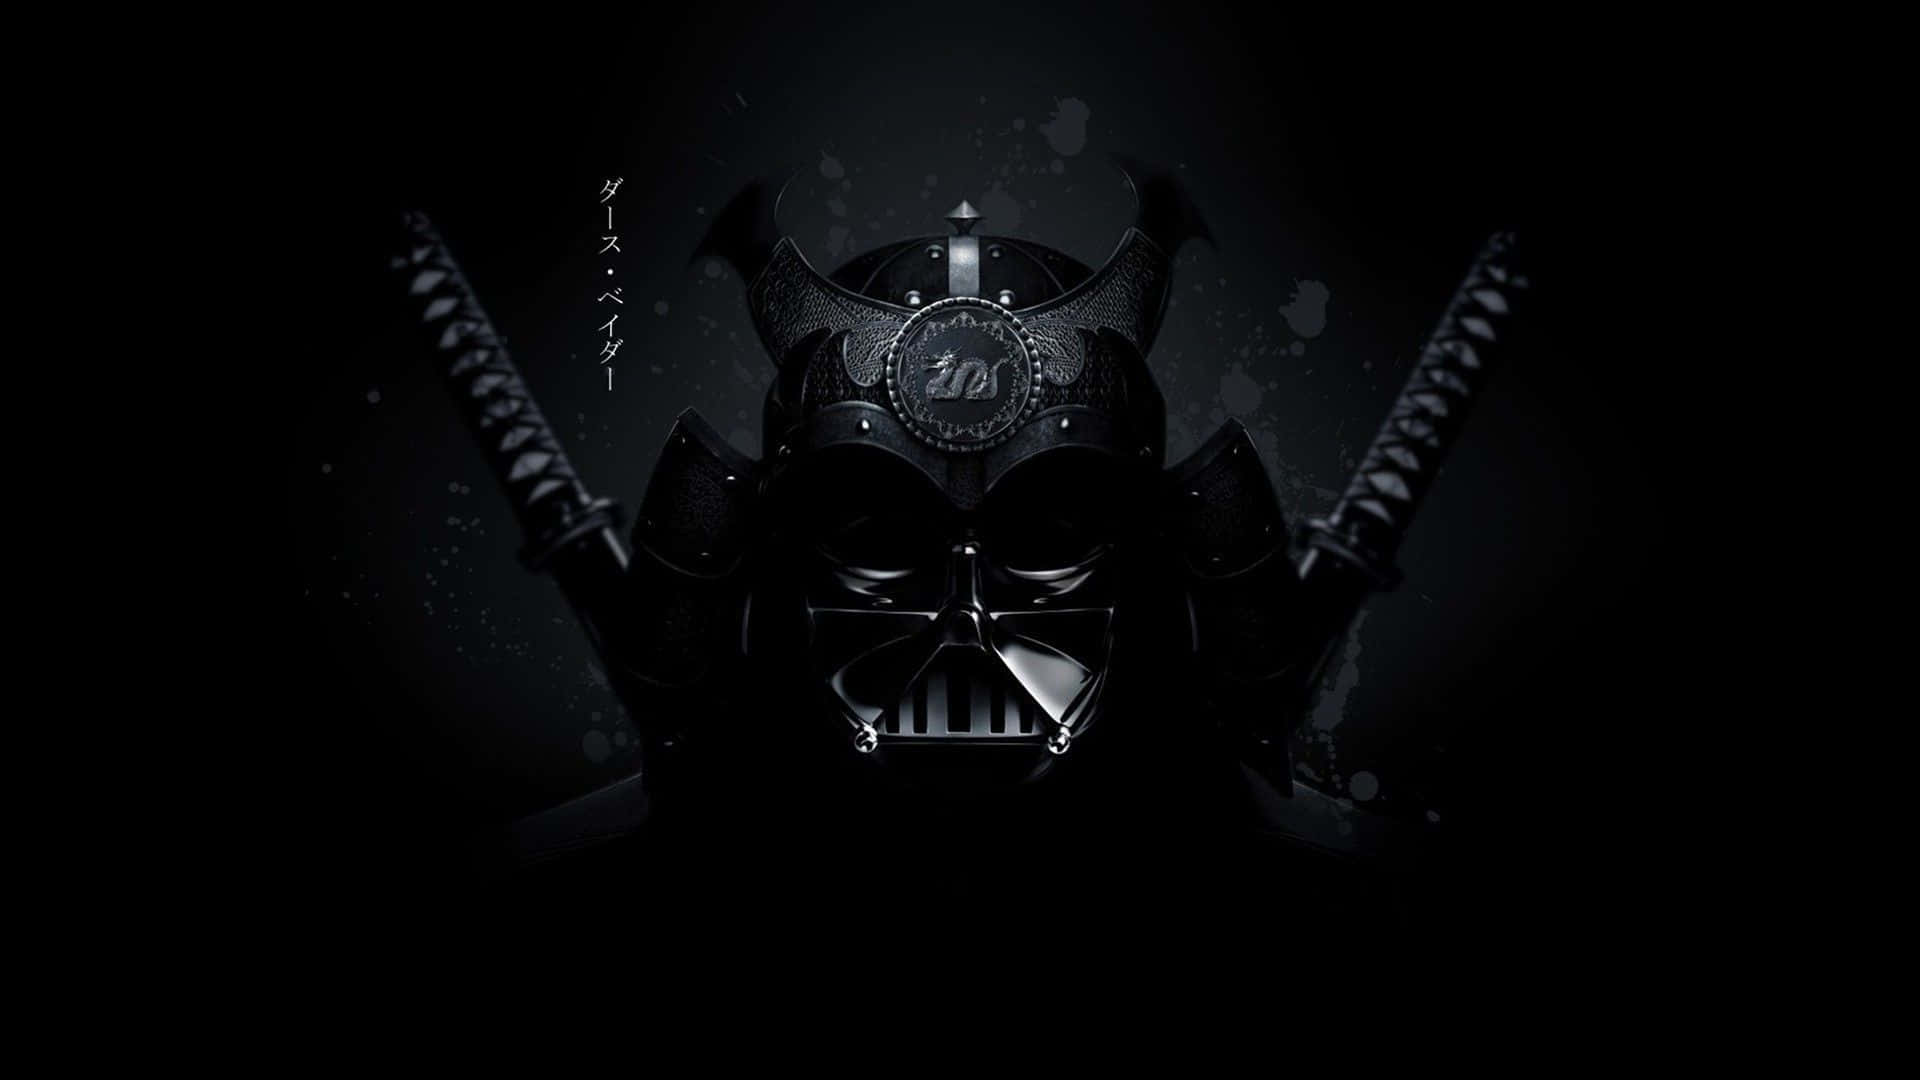 Free Darth Vader Wallpaper Downloads, [100+] Darth Vader Wallpapers for  FREE 